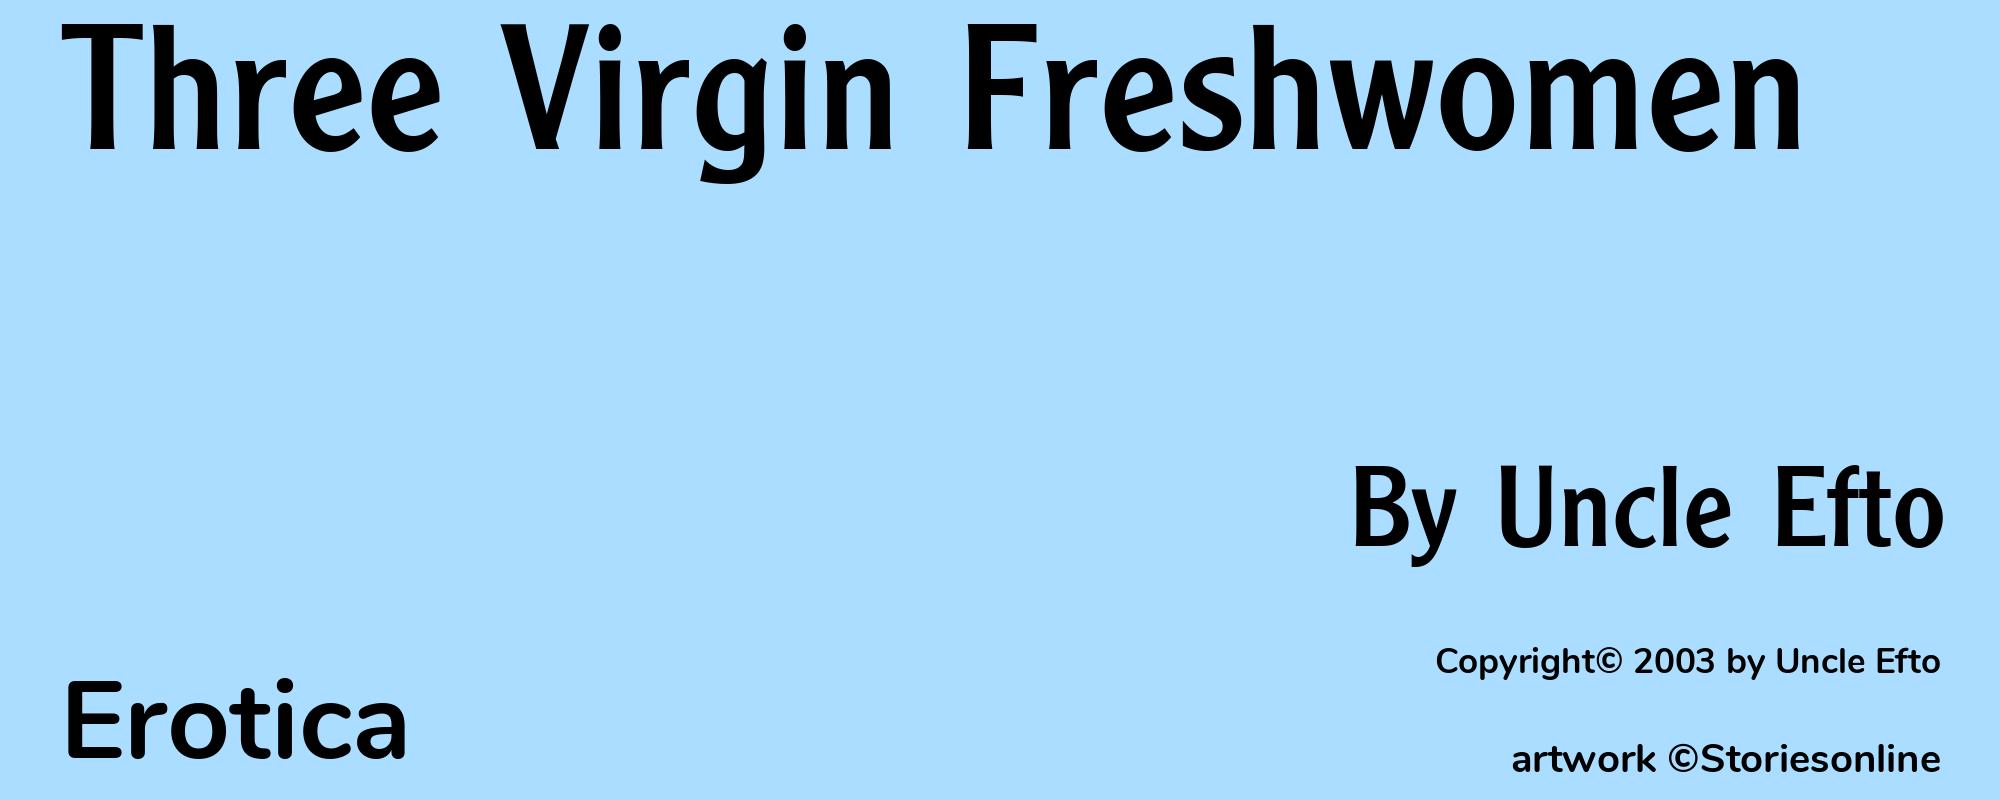 Three Virgin Freshwomen - Cover